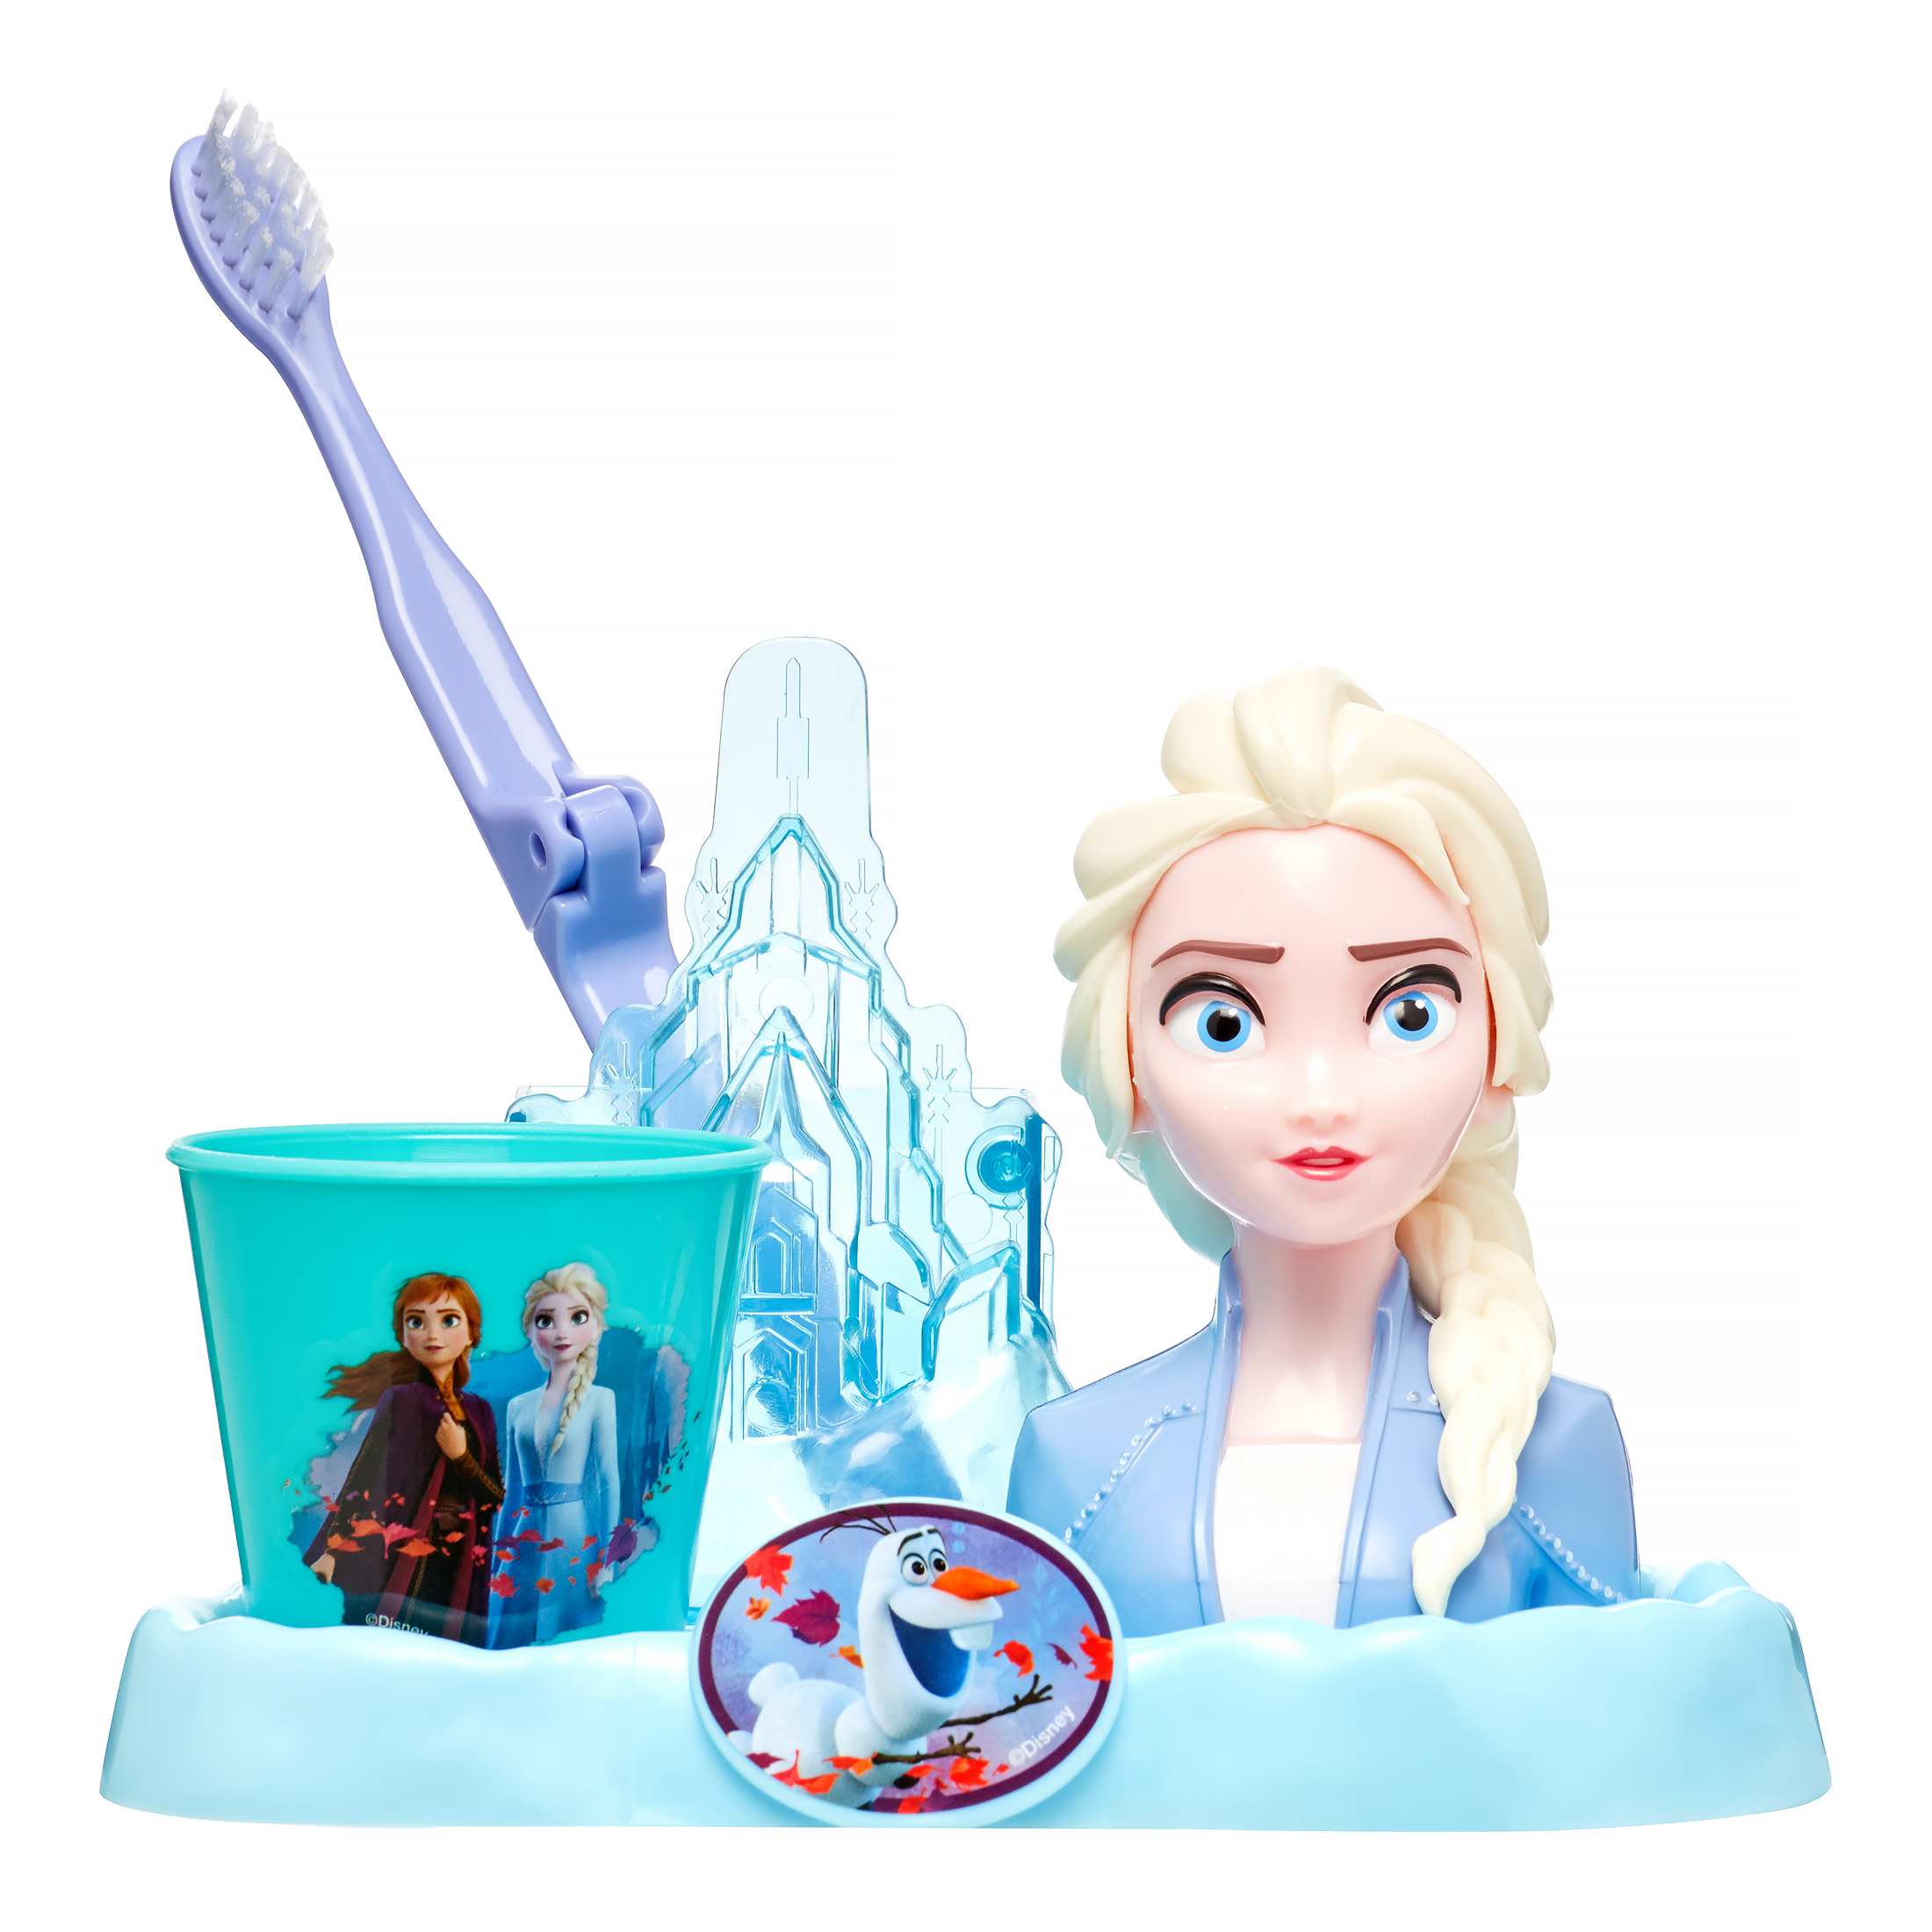 Disney Frozen II 3-Piece Great Smile Elsa Toothbrush and Holder Set - image 3 of 6